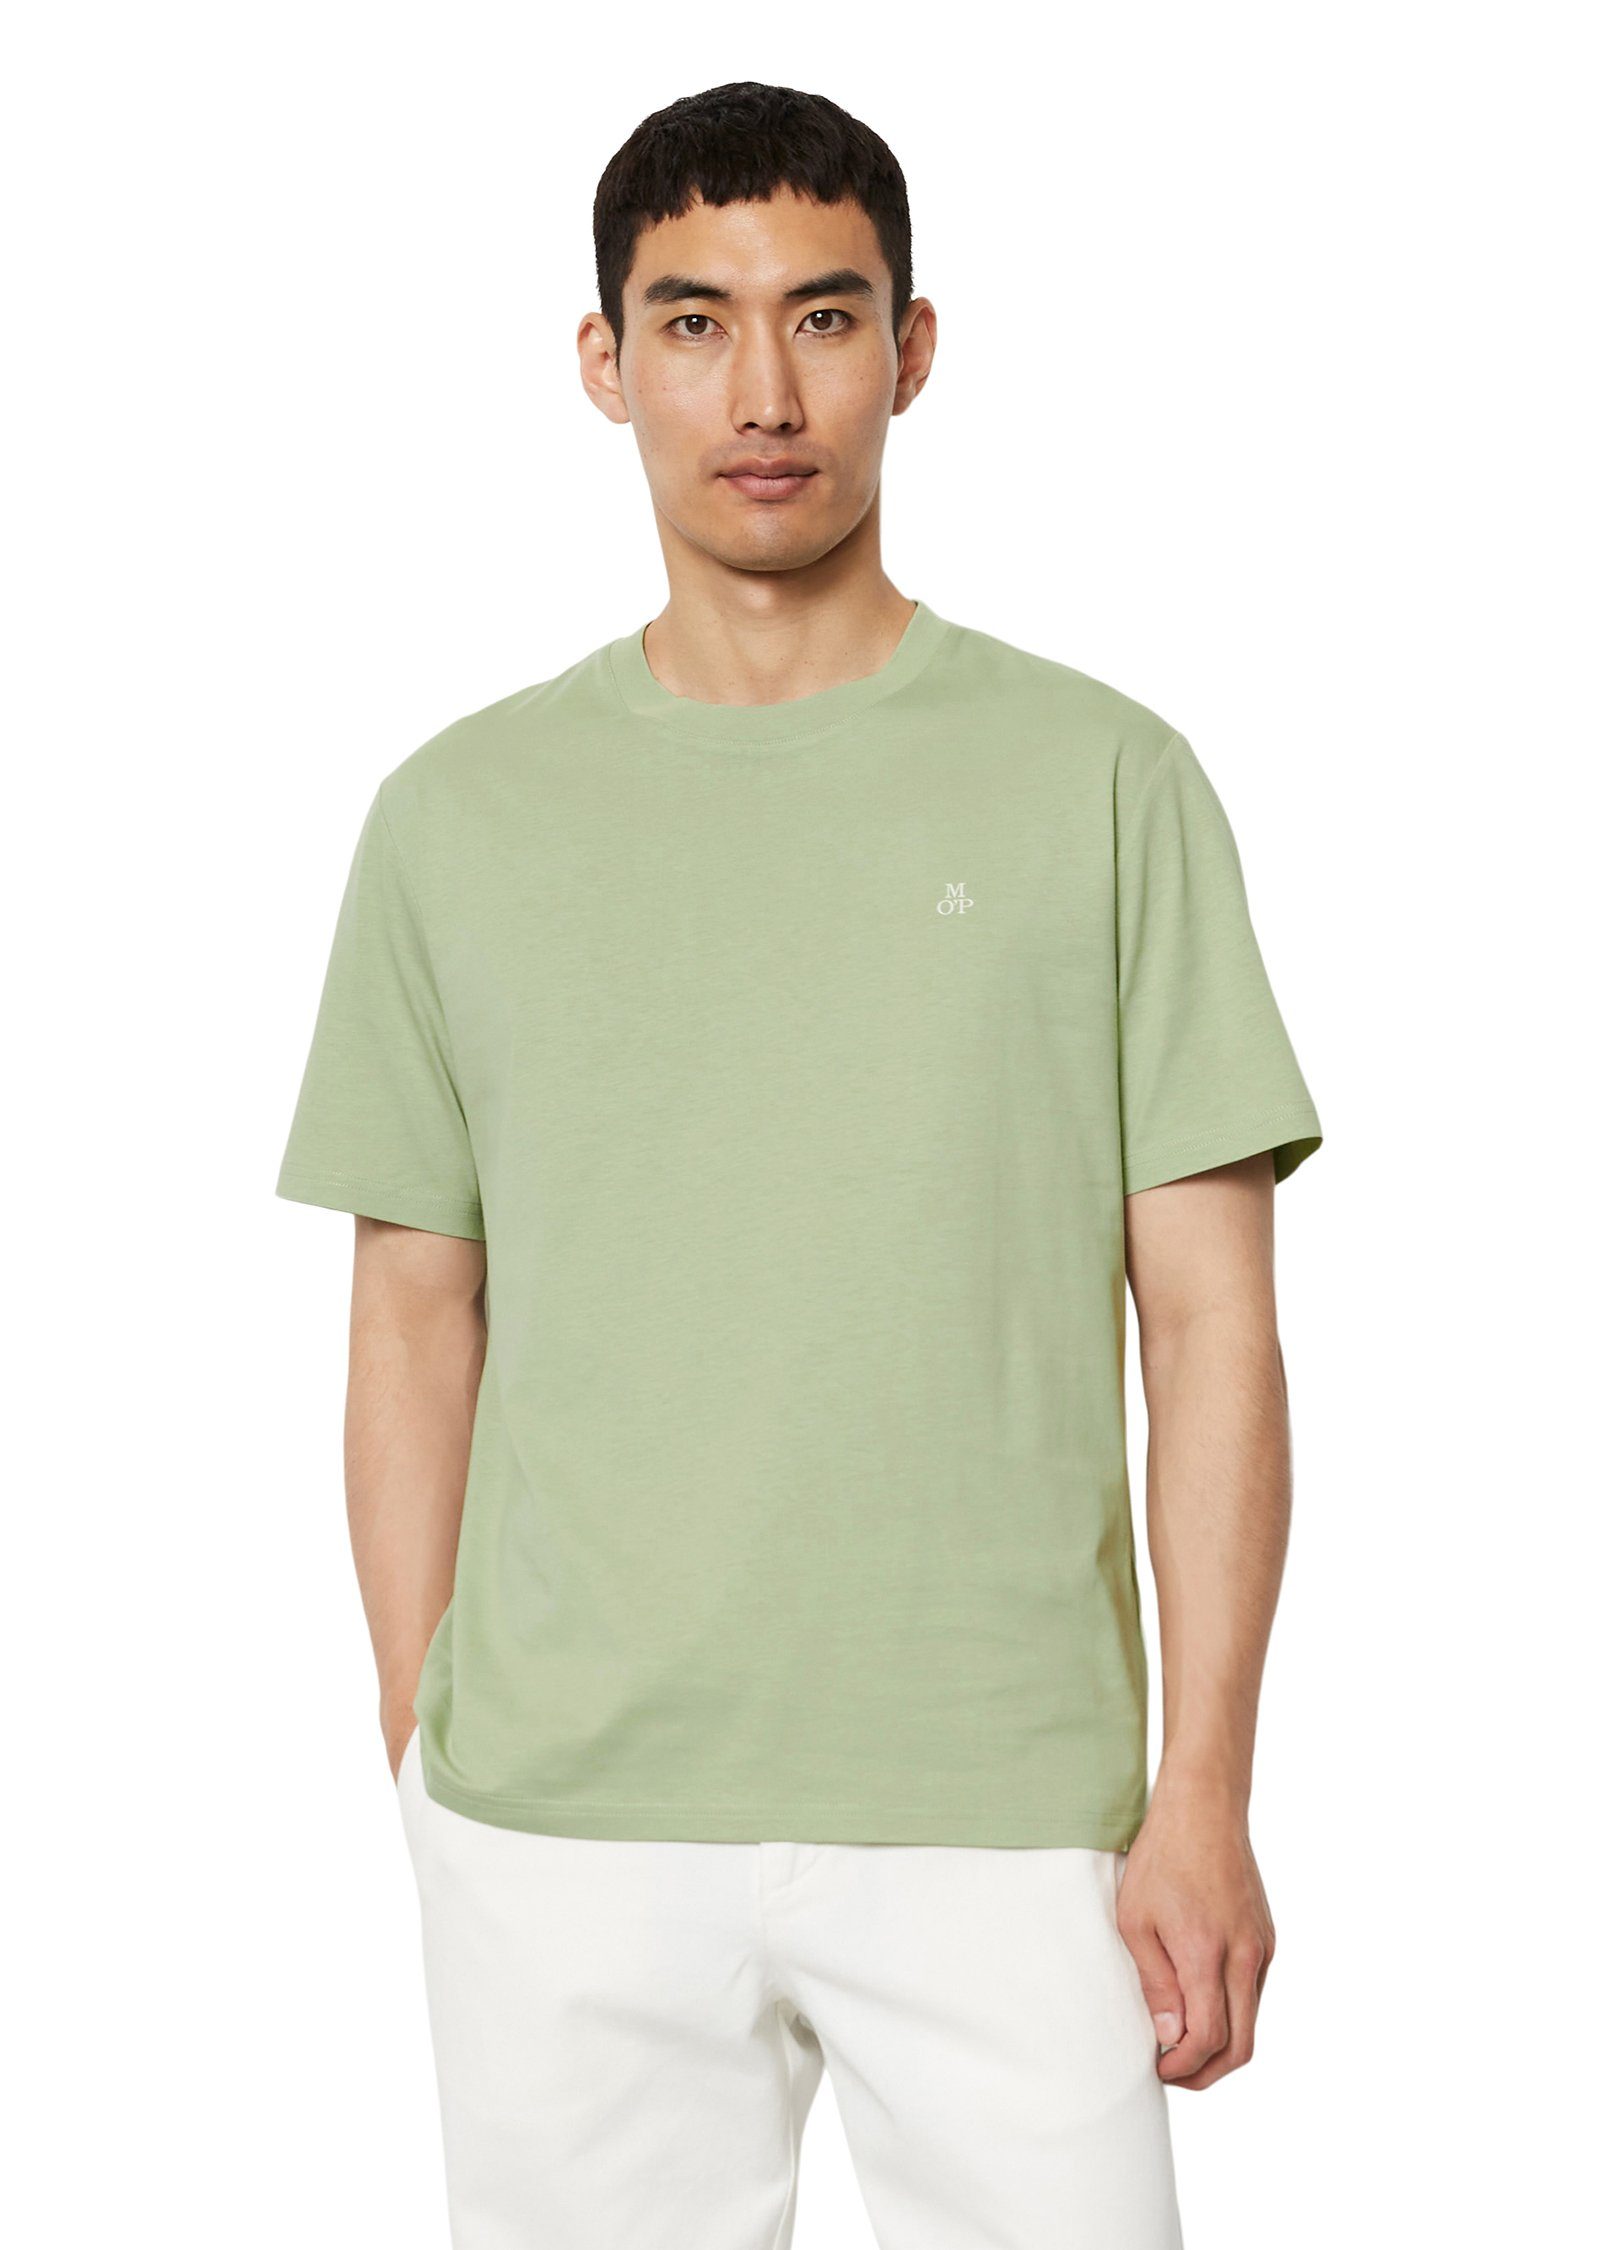 Marc O'Polo T-Shirt T-shirt, short sleeve, logo print, ribbed collar rainee | T-Shirts